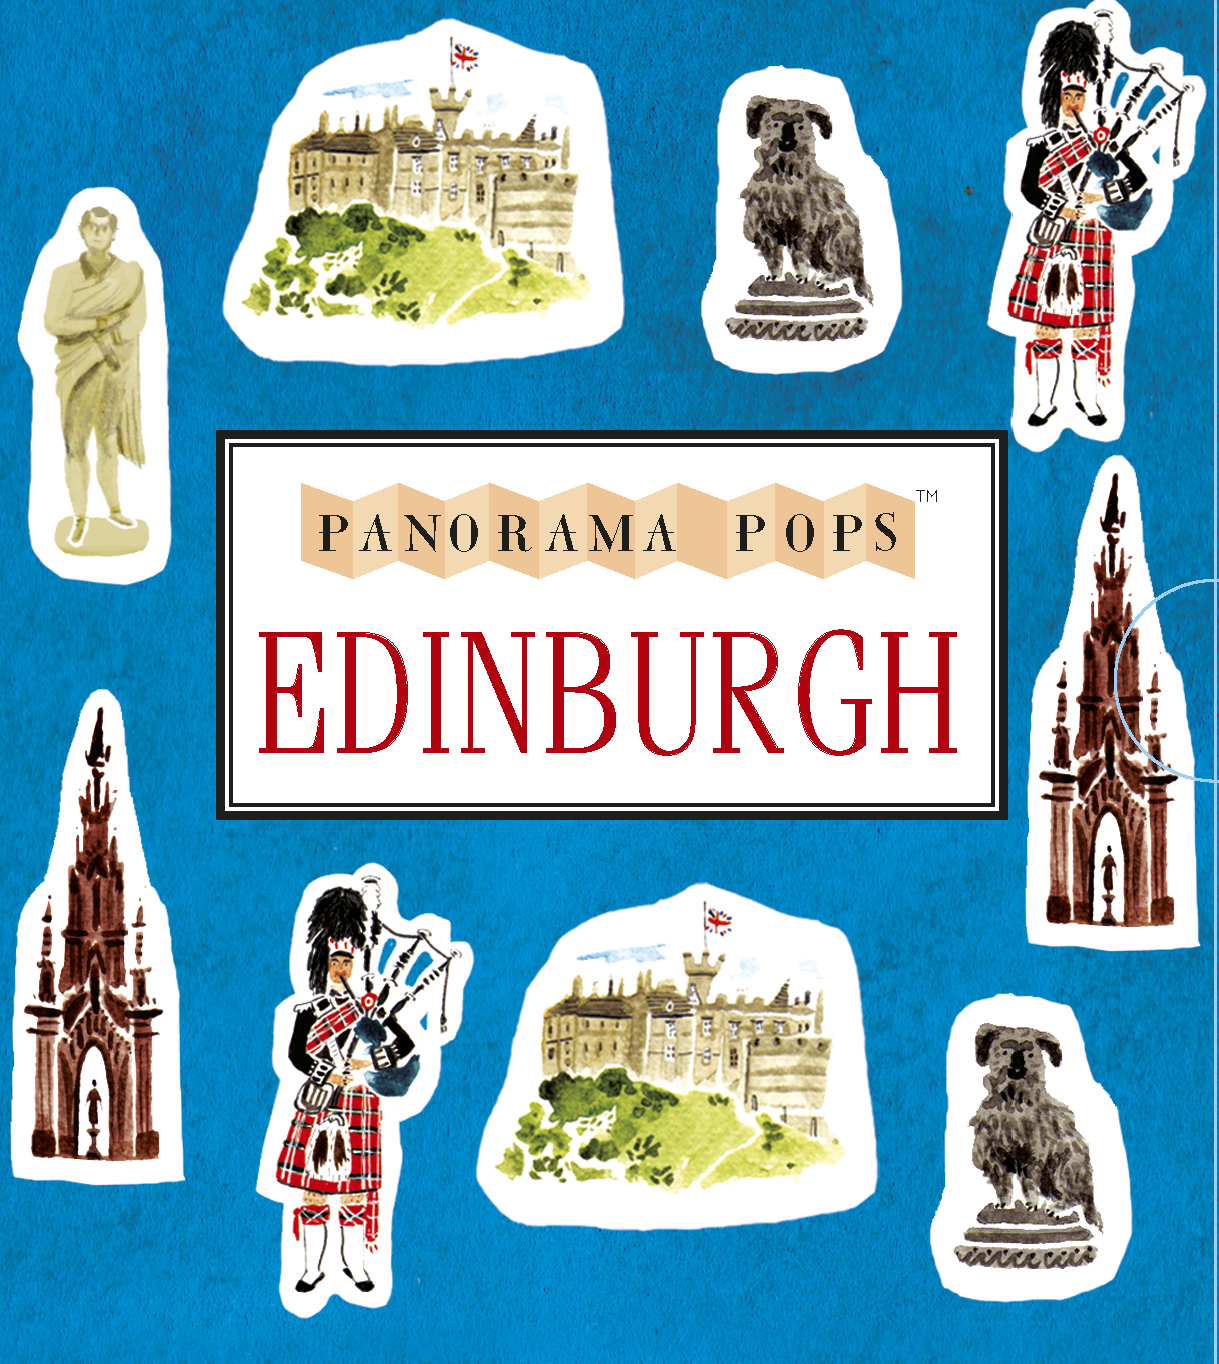 Edinburgh-Panorama-Pops